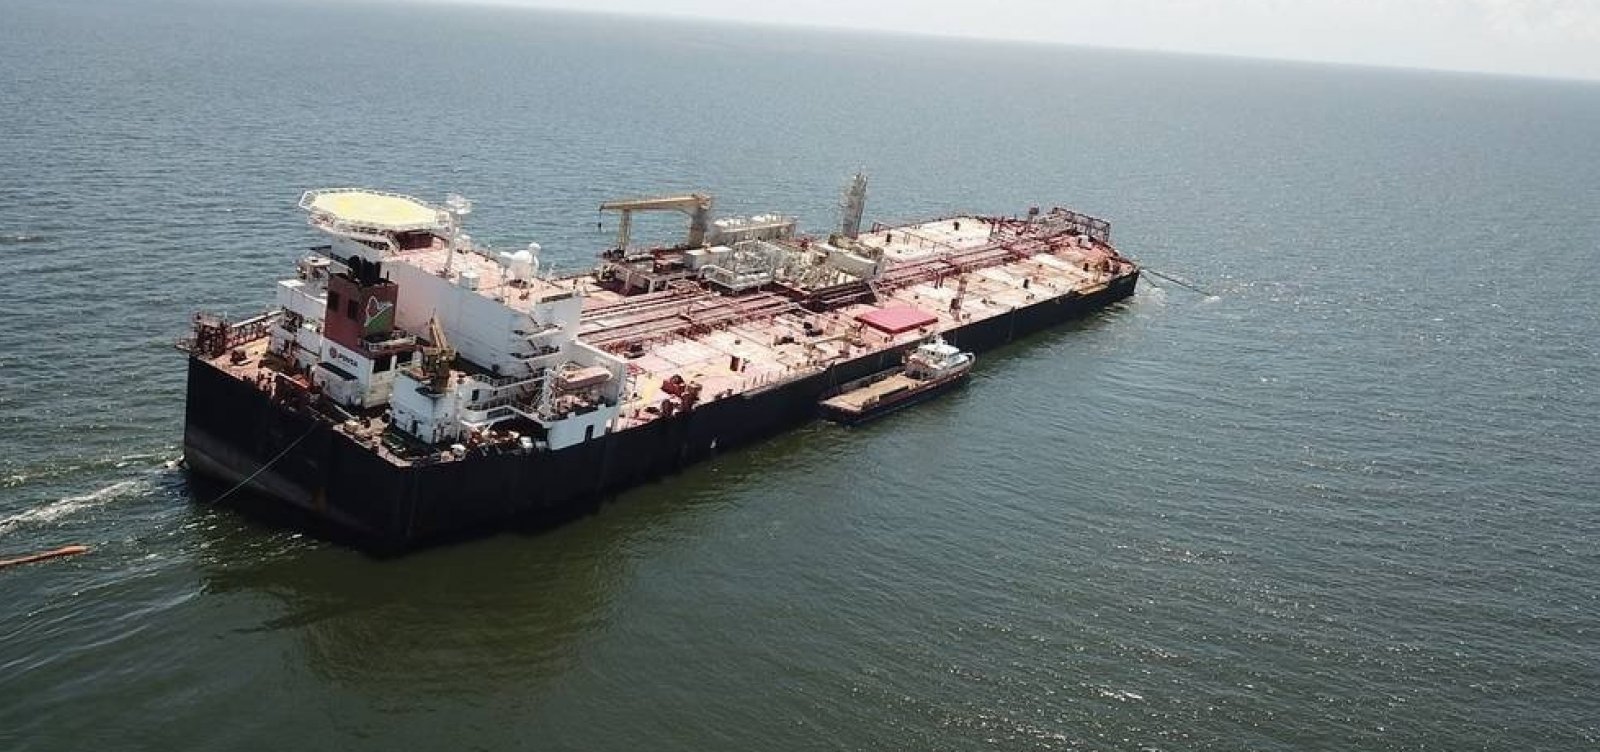 ONG alerta sobre petroleiro inclinado a mil quilômetros da costa brasileira